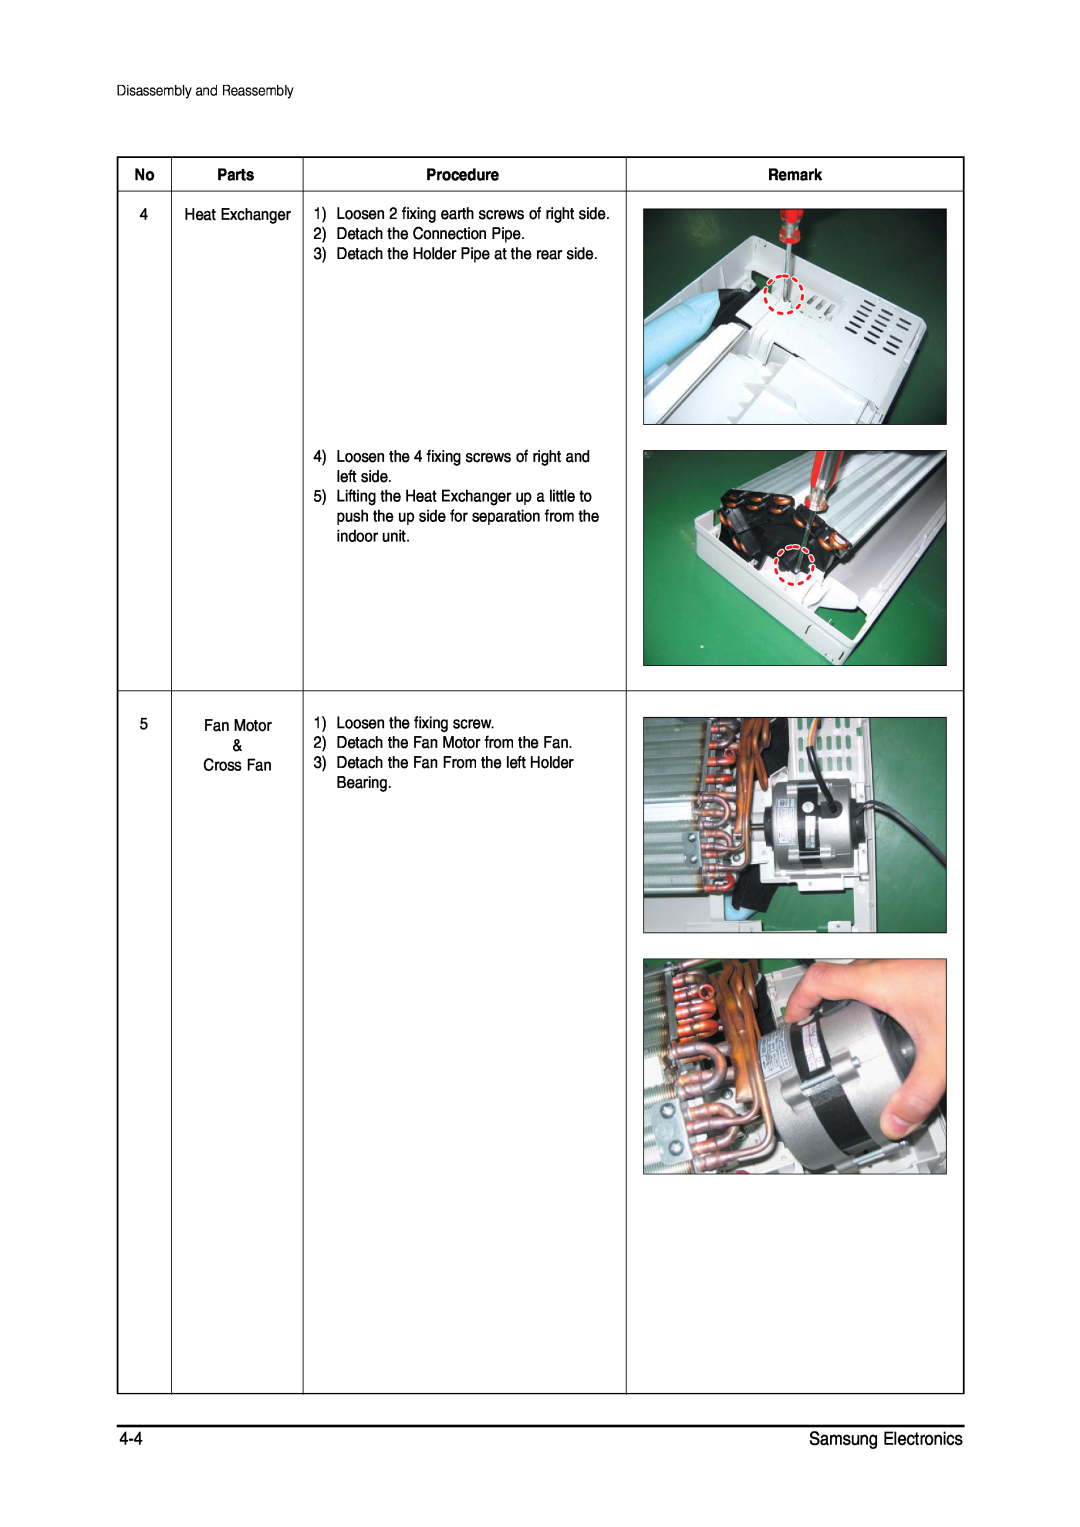 Samsung MH026FNCA service manual Parts, Procedure, Remark 